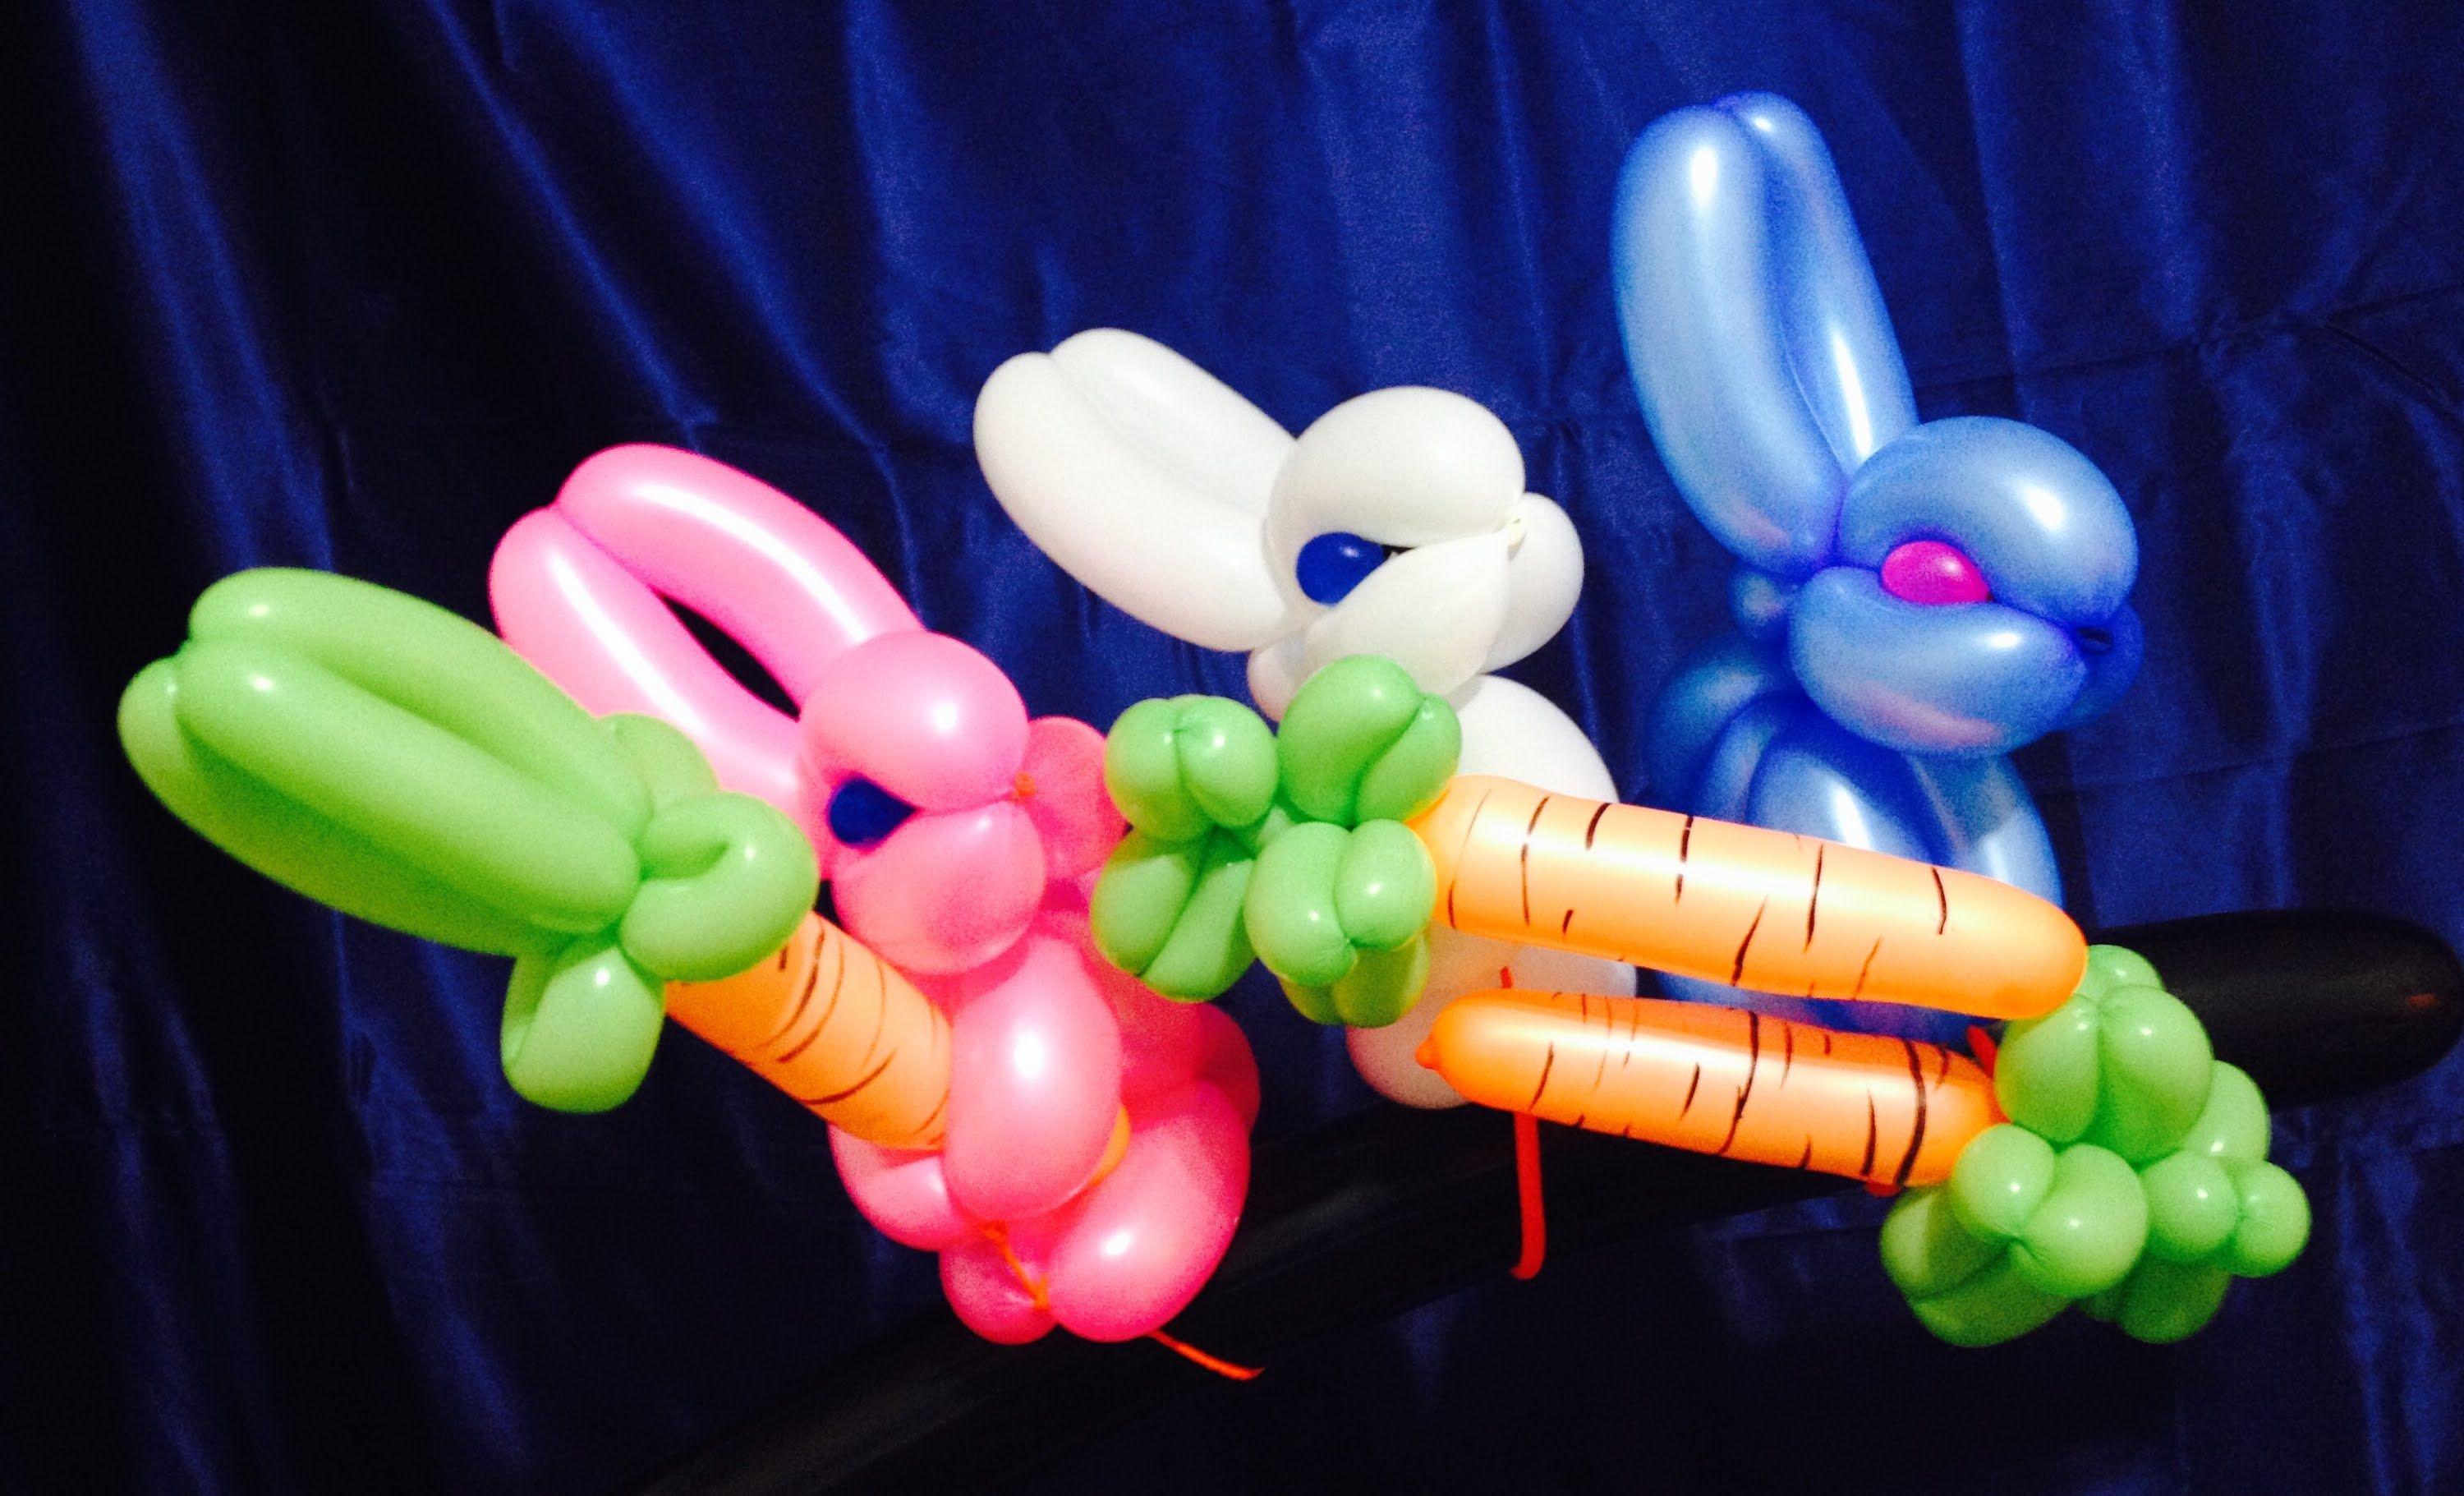 Шары колбаски. Собачка твистинг твистинг. Фигуры из воздушных шаров. Фигурки из воздушных шаров длинных. Фигуры из шаров для моделирования.